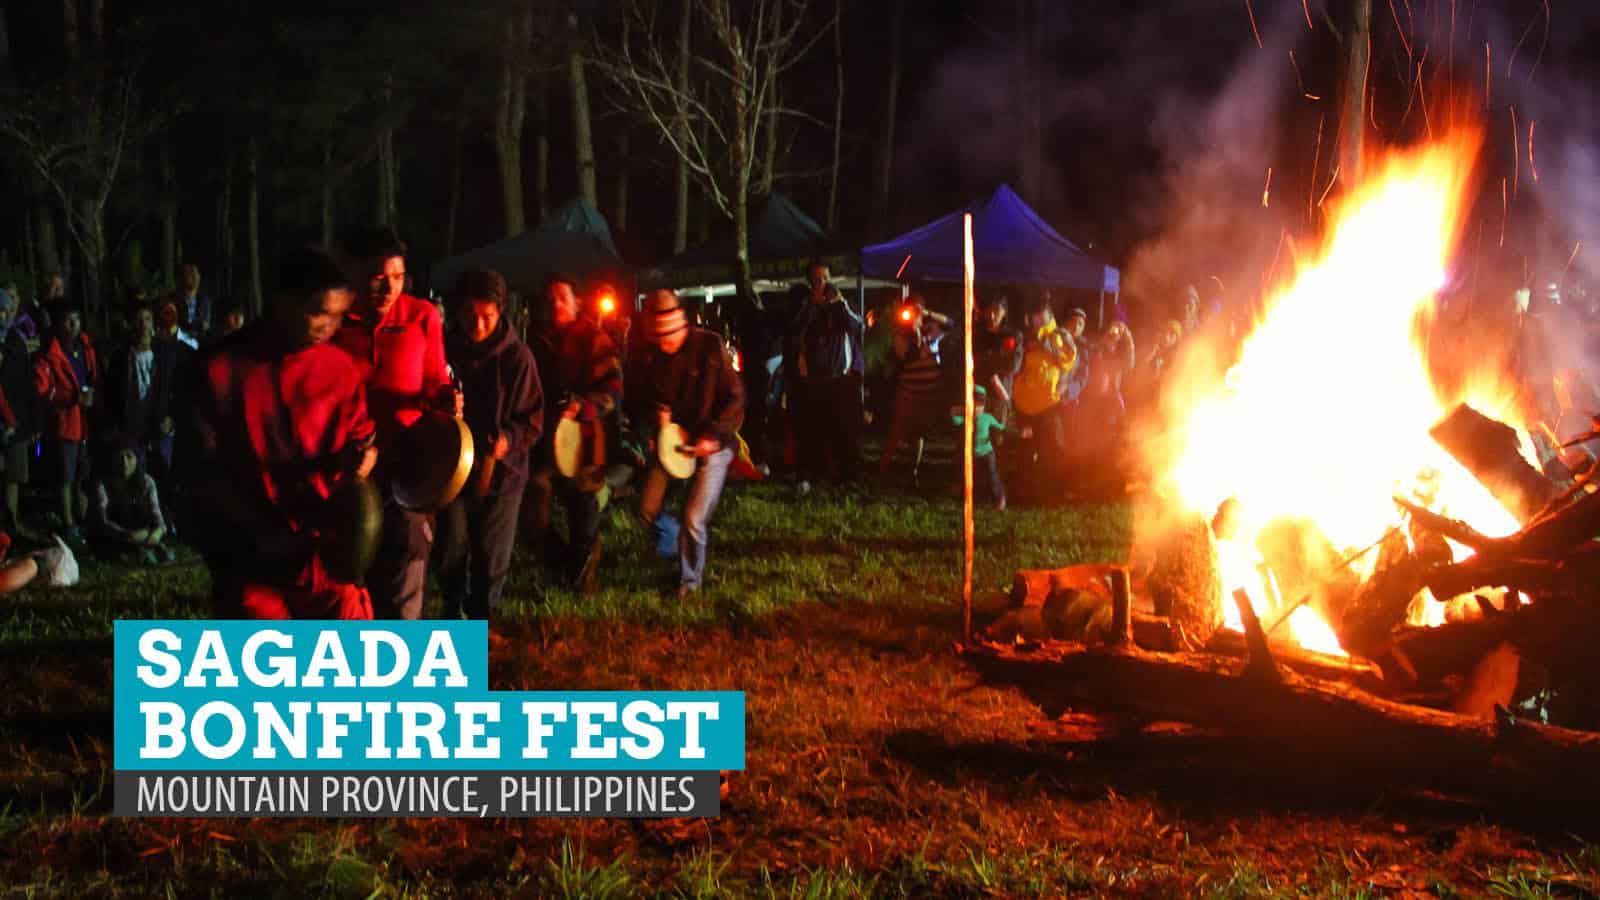 Sagada Bonfire Fest in Mountain Province, Philippines